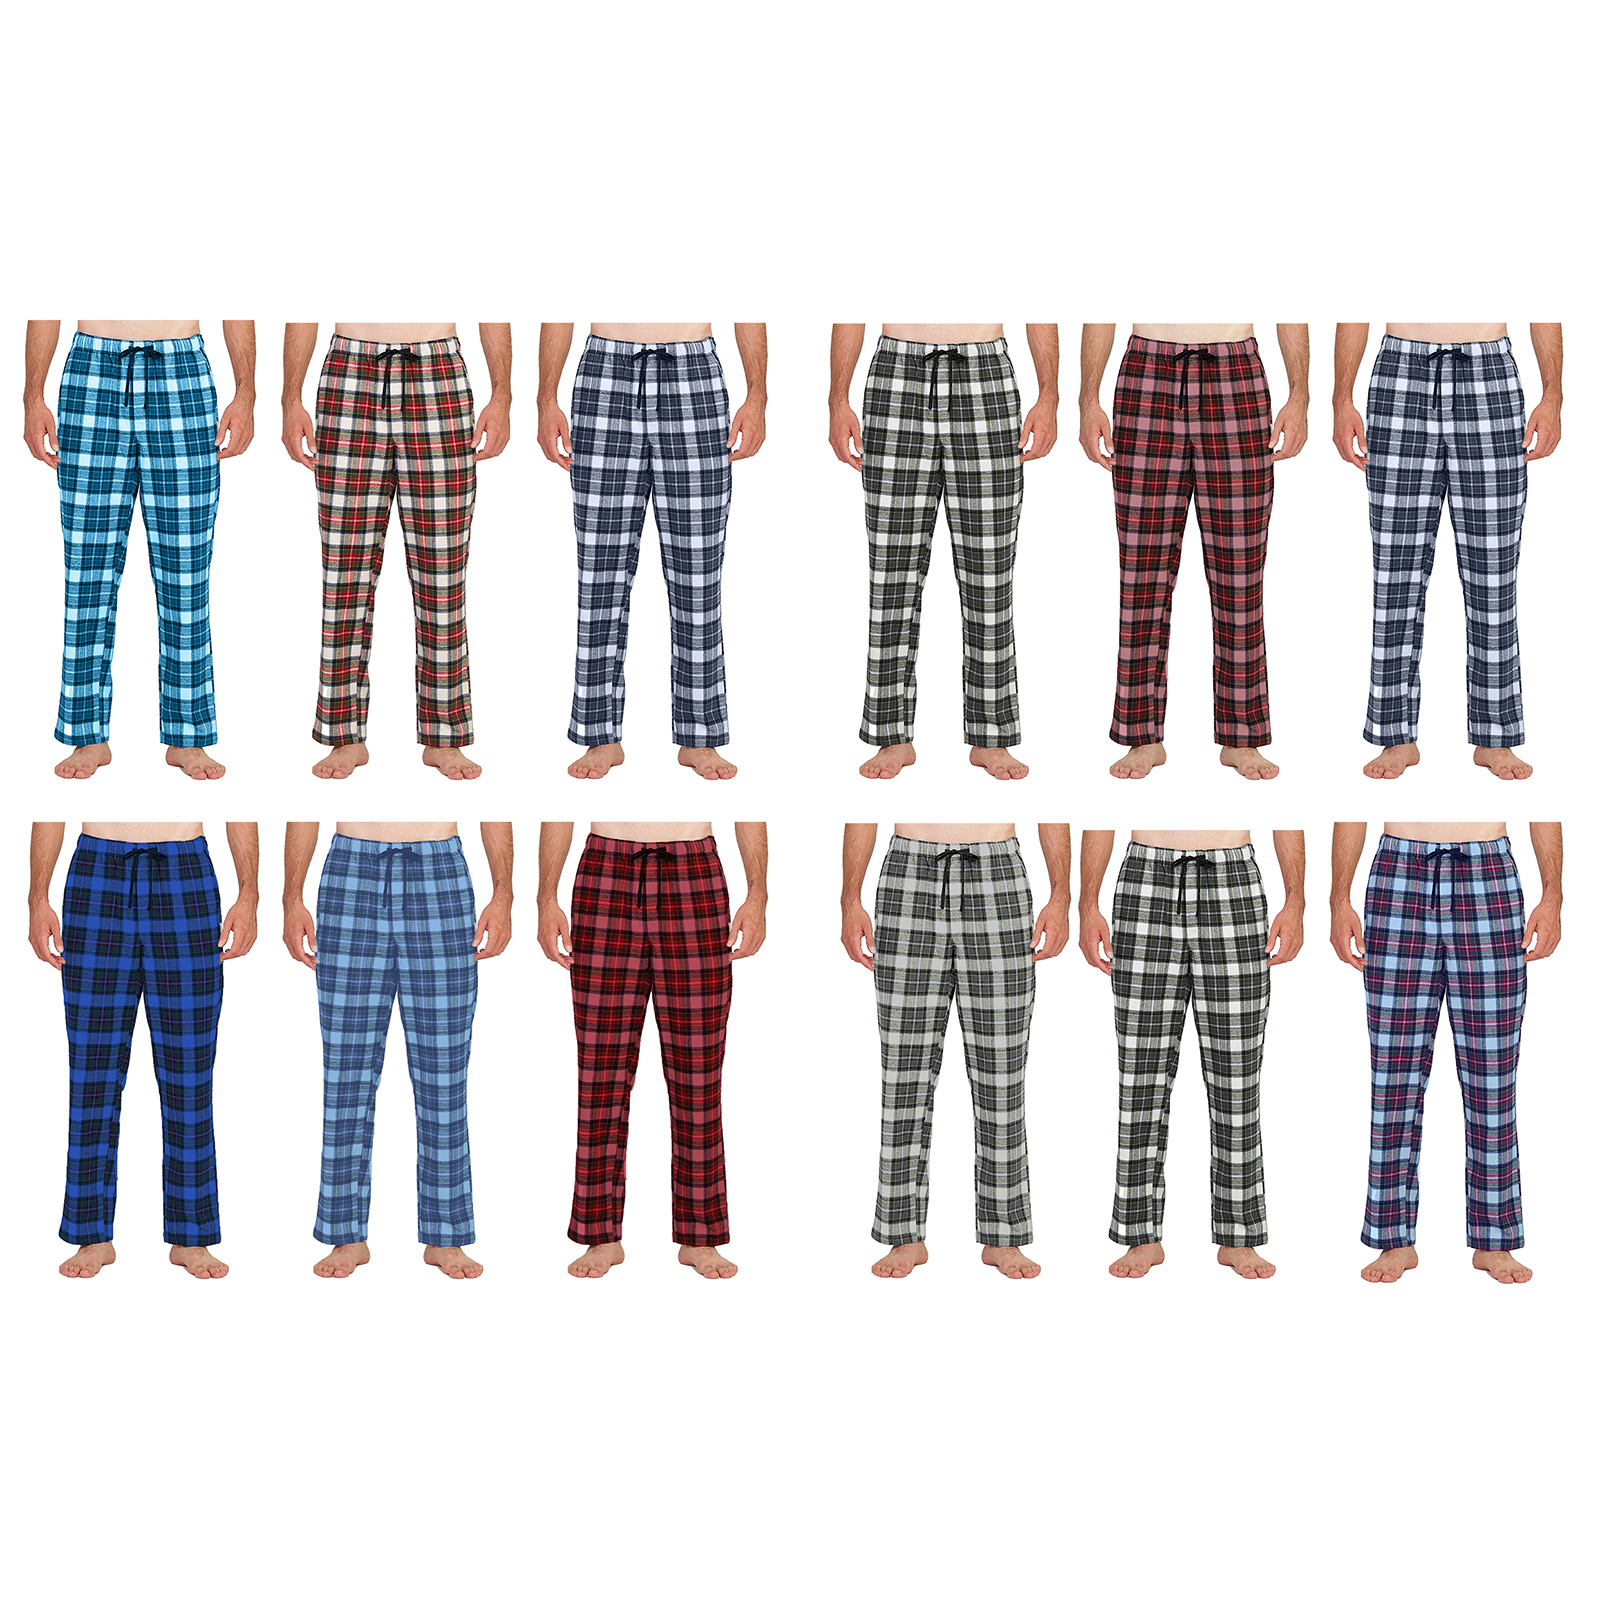 2-Pack: Men's Soft 100% Cotton Flannel Plaid Lounge Pajama Sleep Pants - X-Large